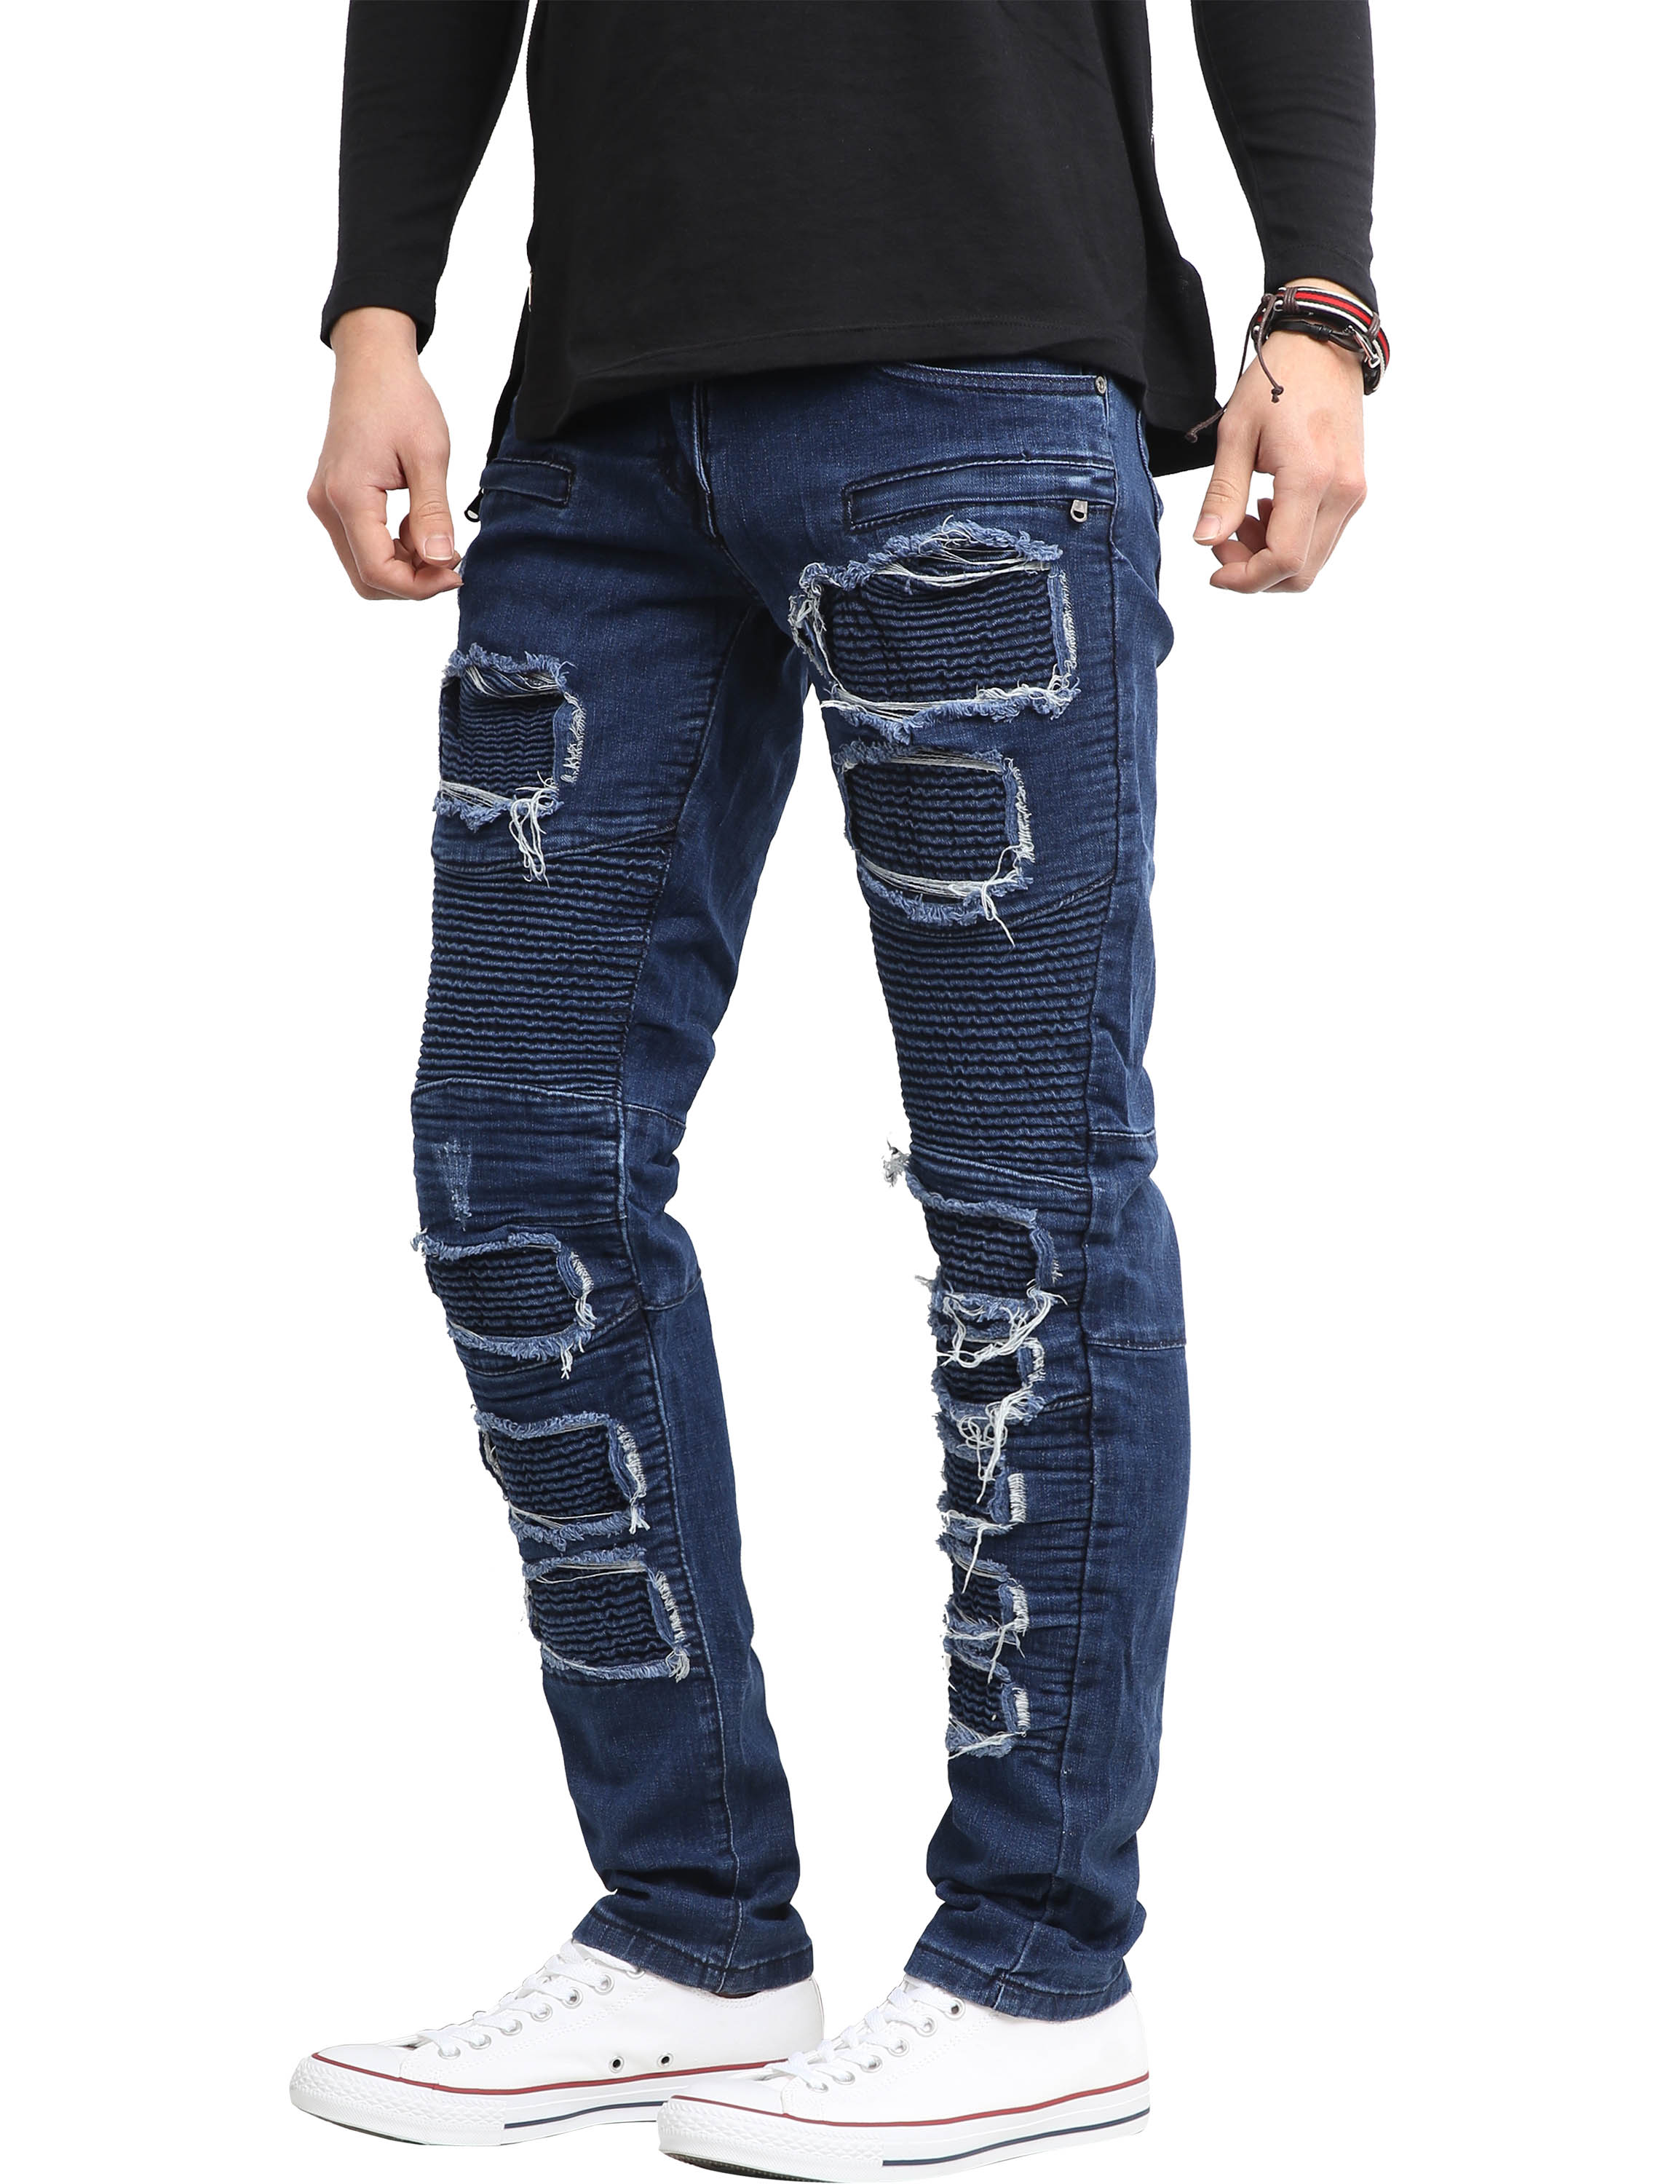 Ma Croix Mens Biker Jeans Distressed Ripped Zipper Straight Slim Fit Stretch Denim Pants - image 3 of 5